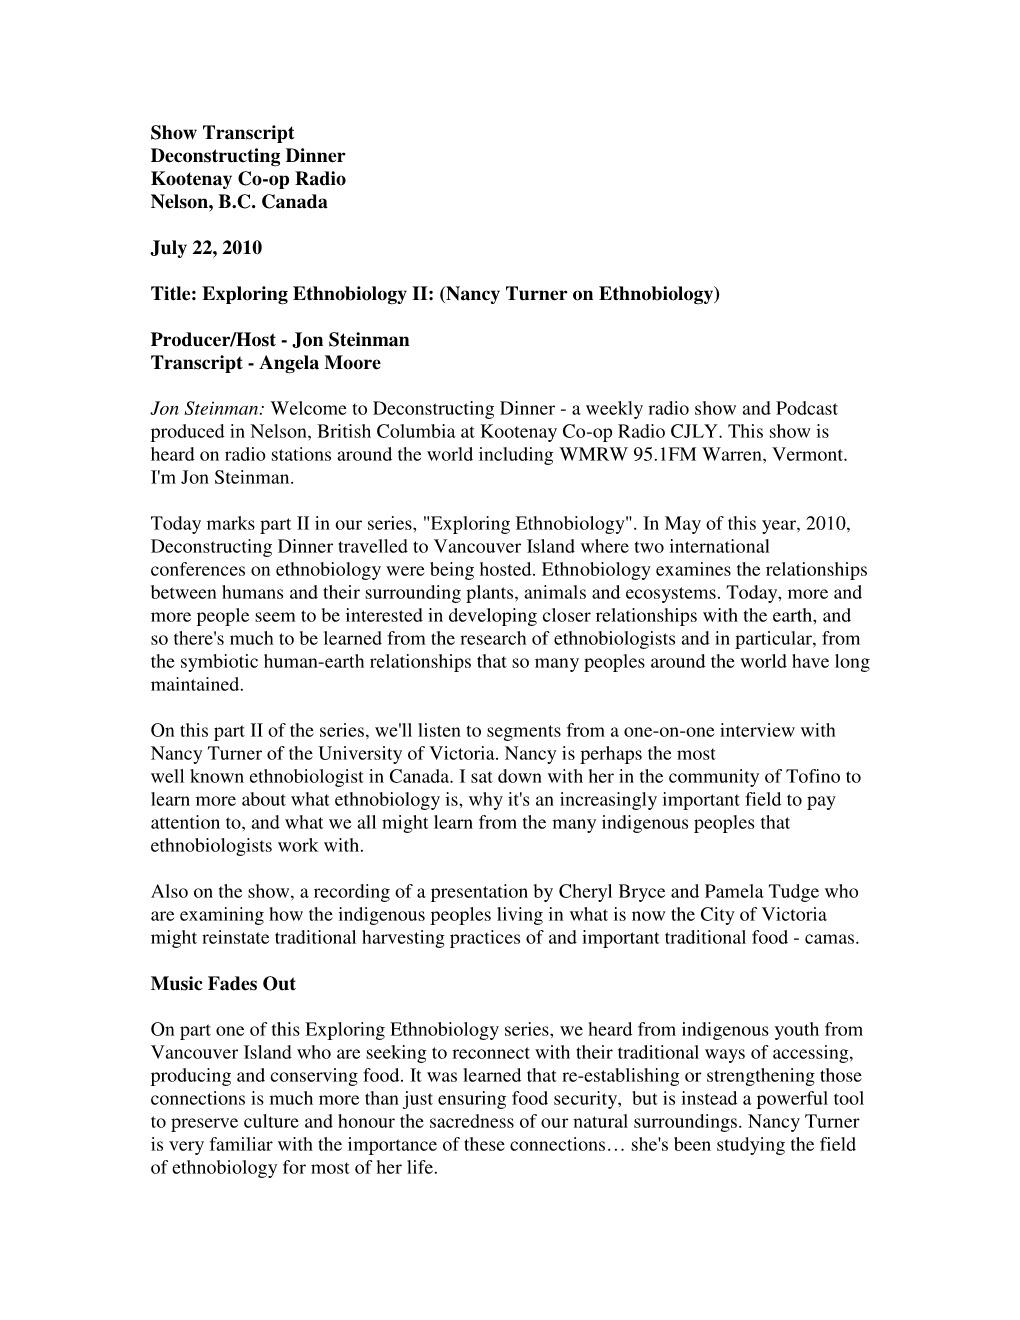 Show Transcript Deconstructing Dinner Kootenay Co-Op Radio Nelson, B.C. Canada July 22, 2010 Title: Exploring Ethnobiology II: (